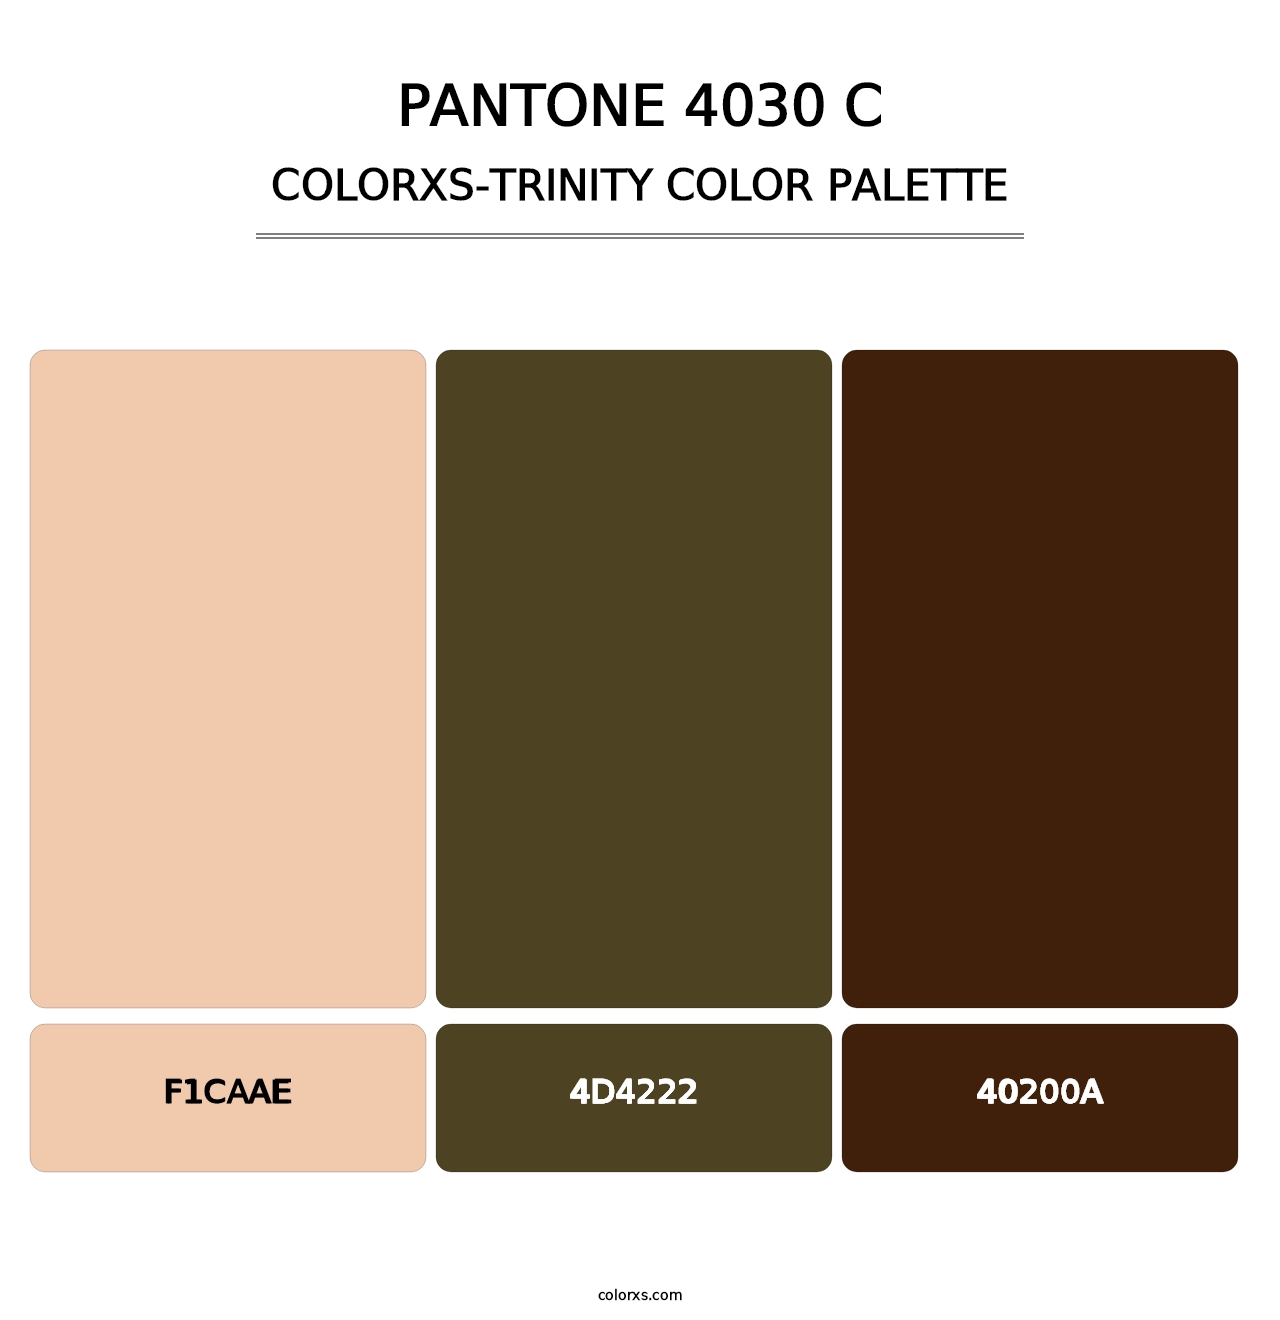 PANTONE 4030 C - Colorxs Trinity Palette